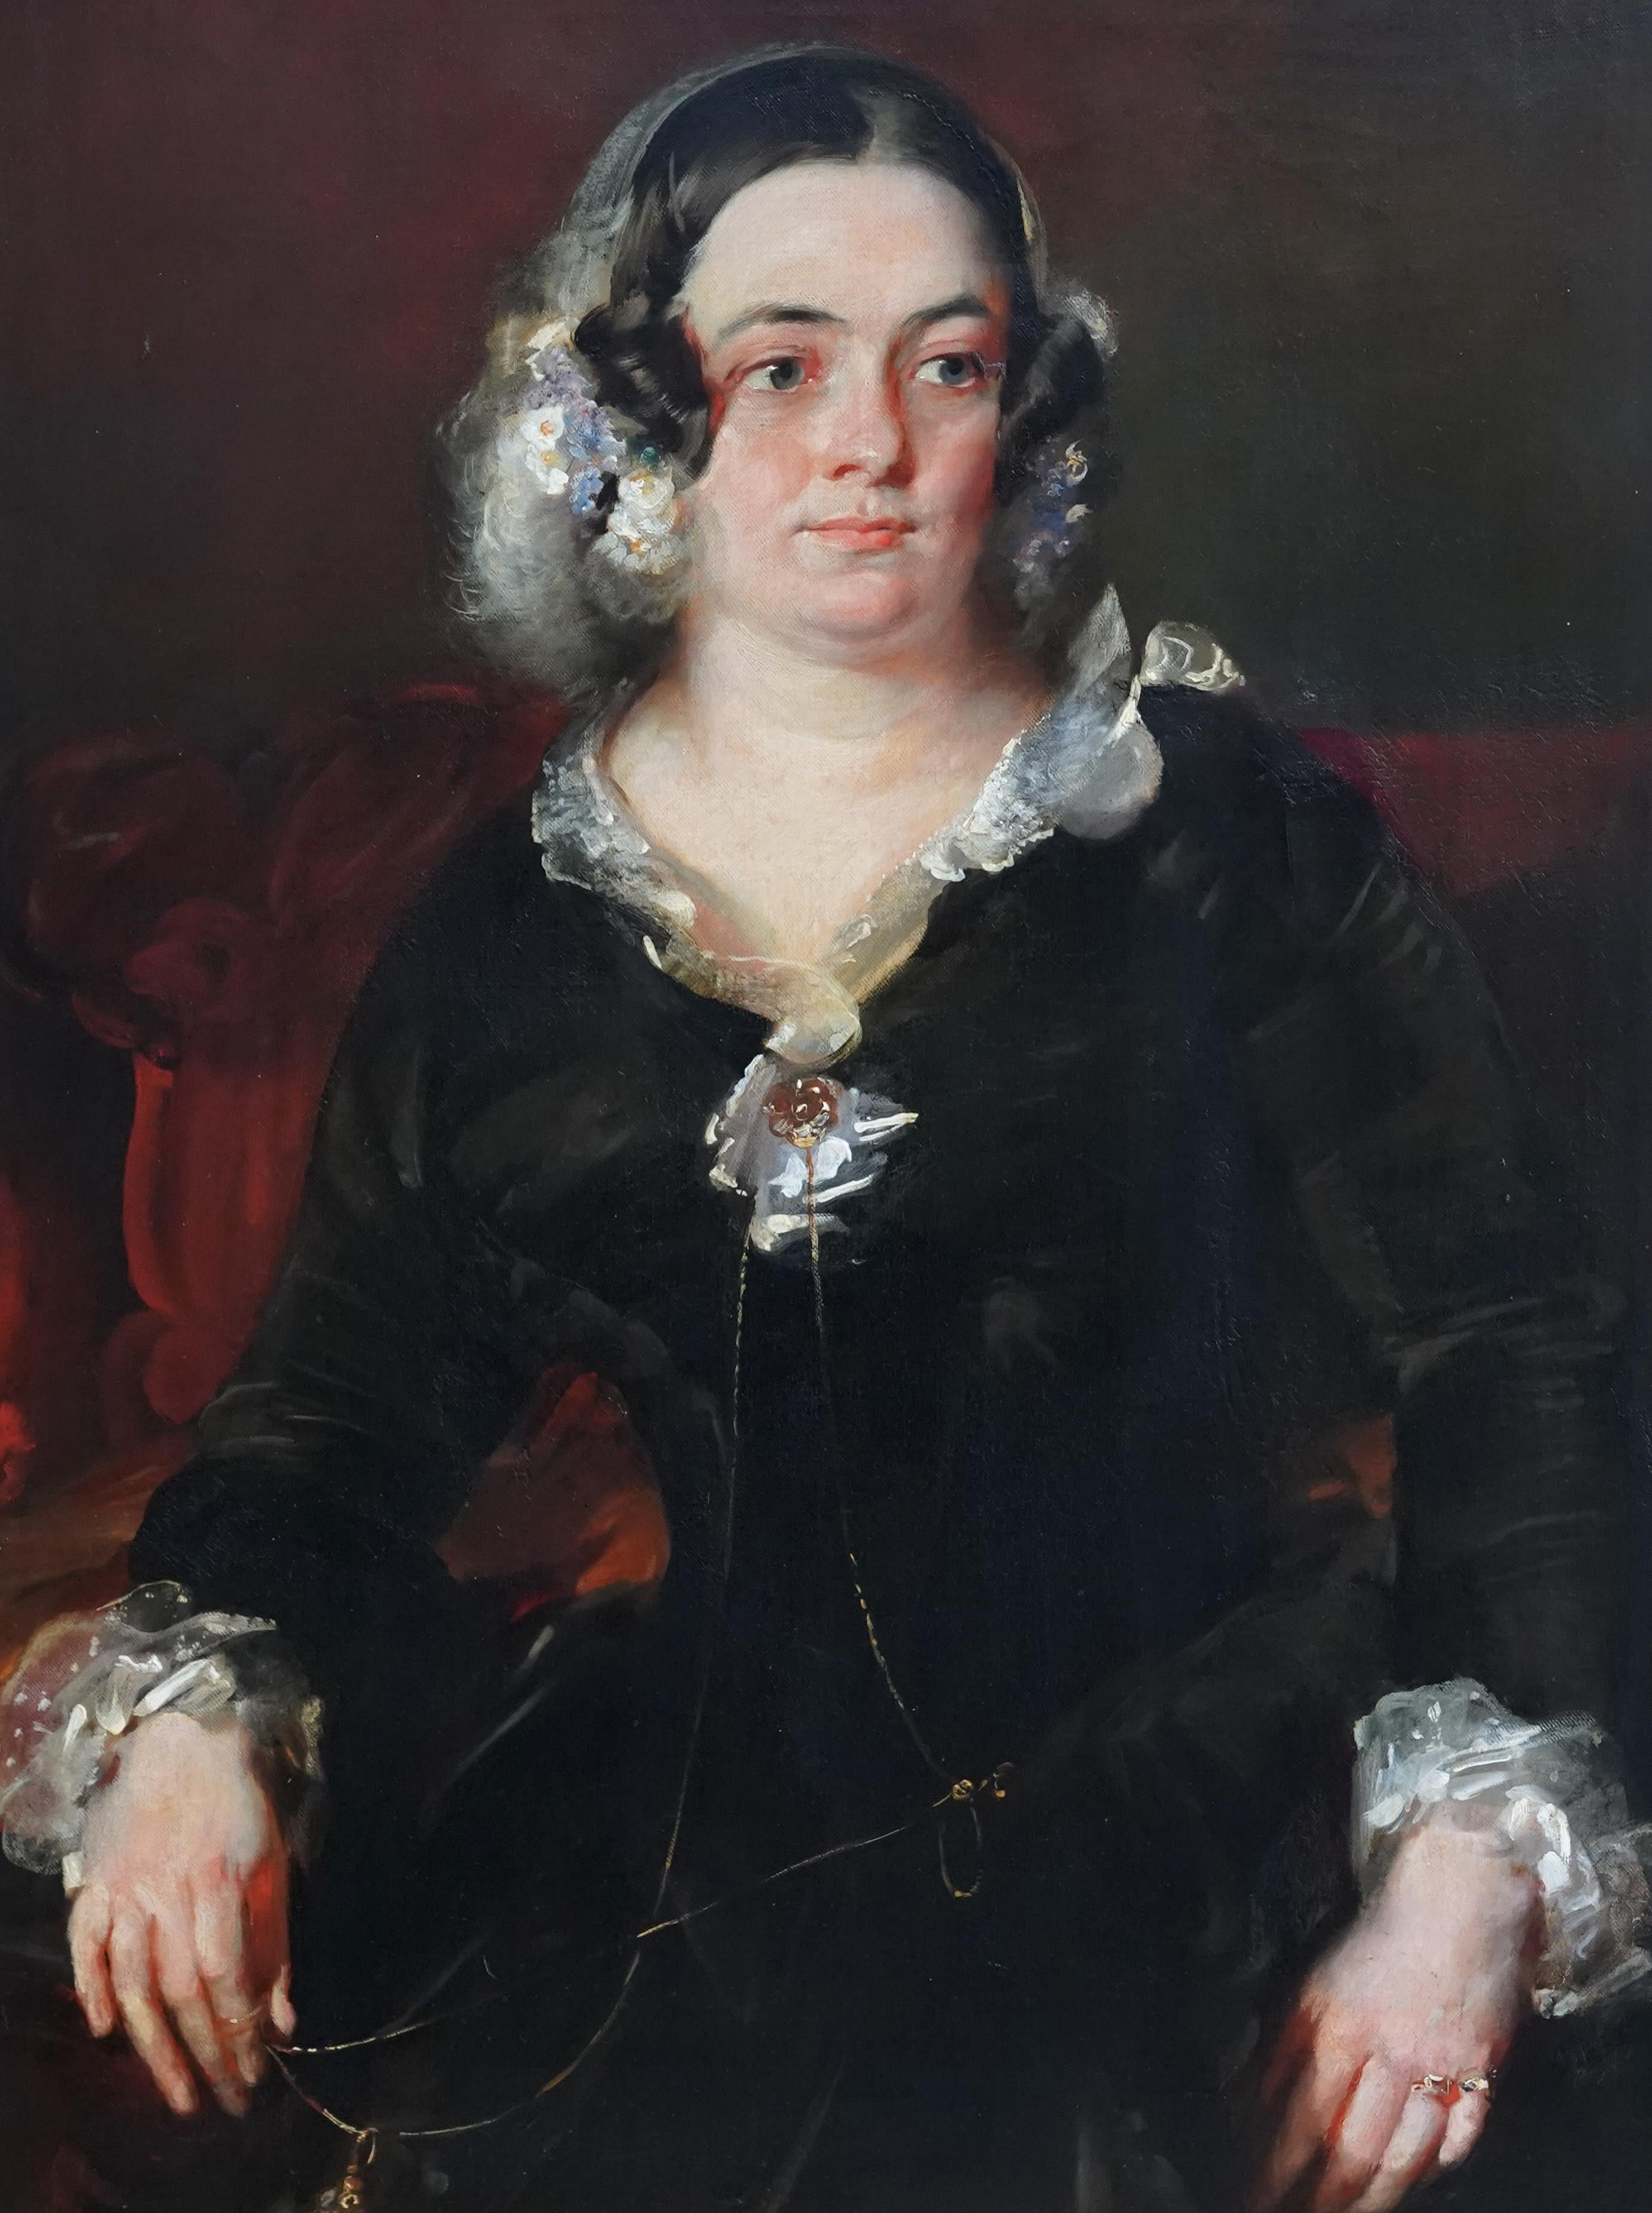 18th century collar